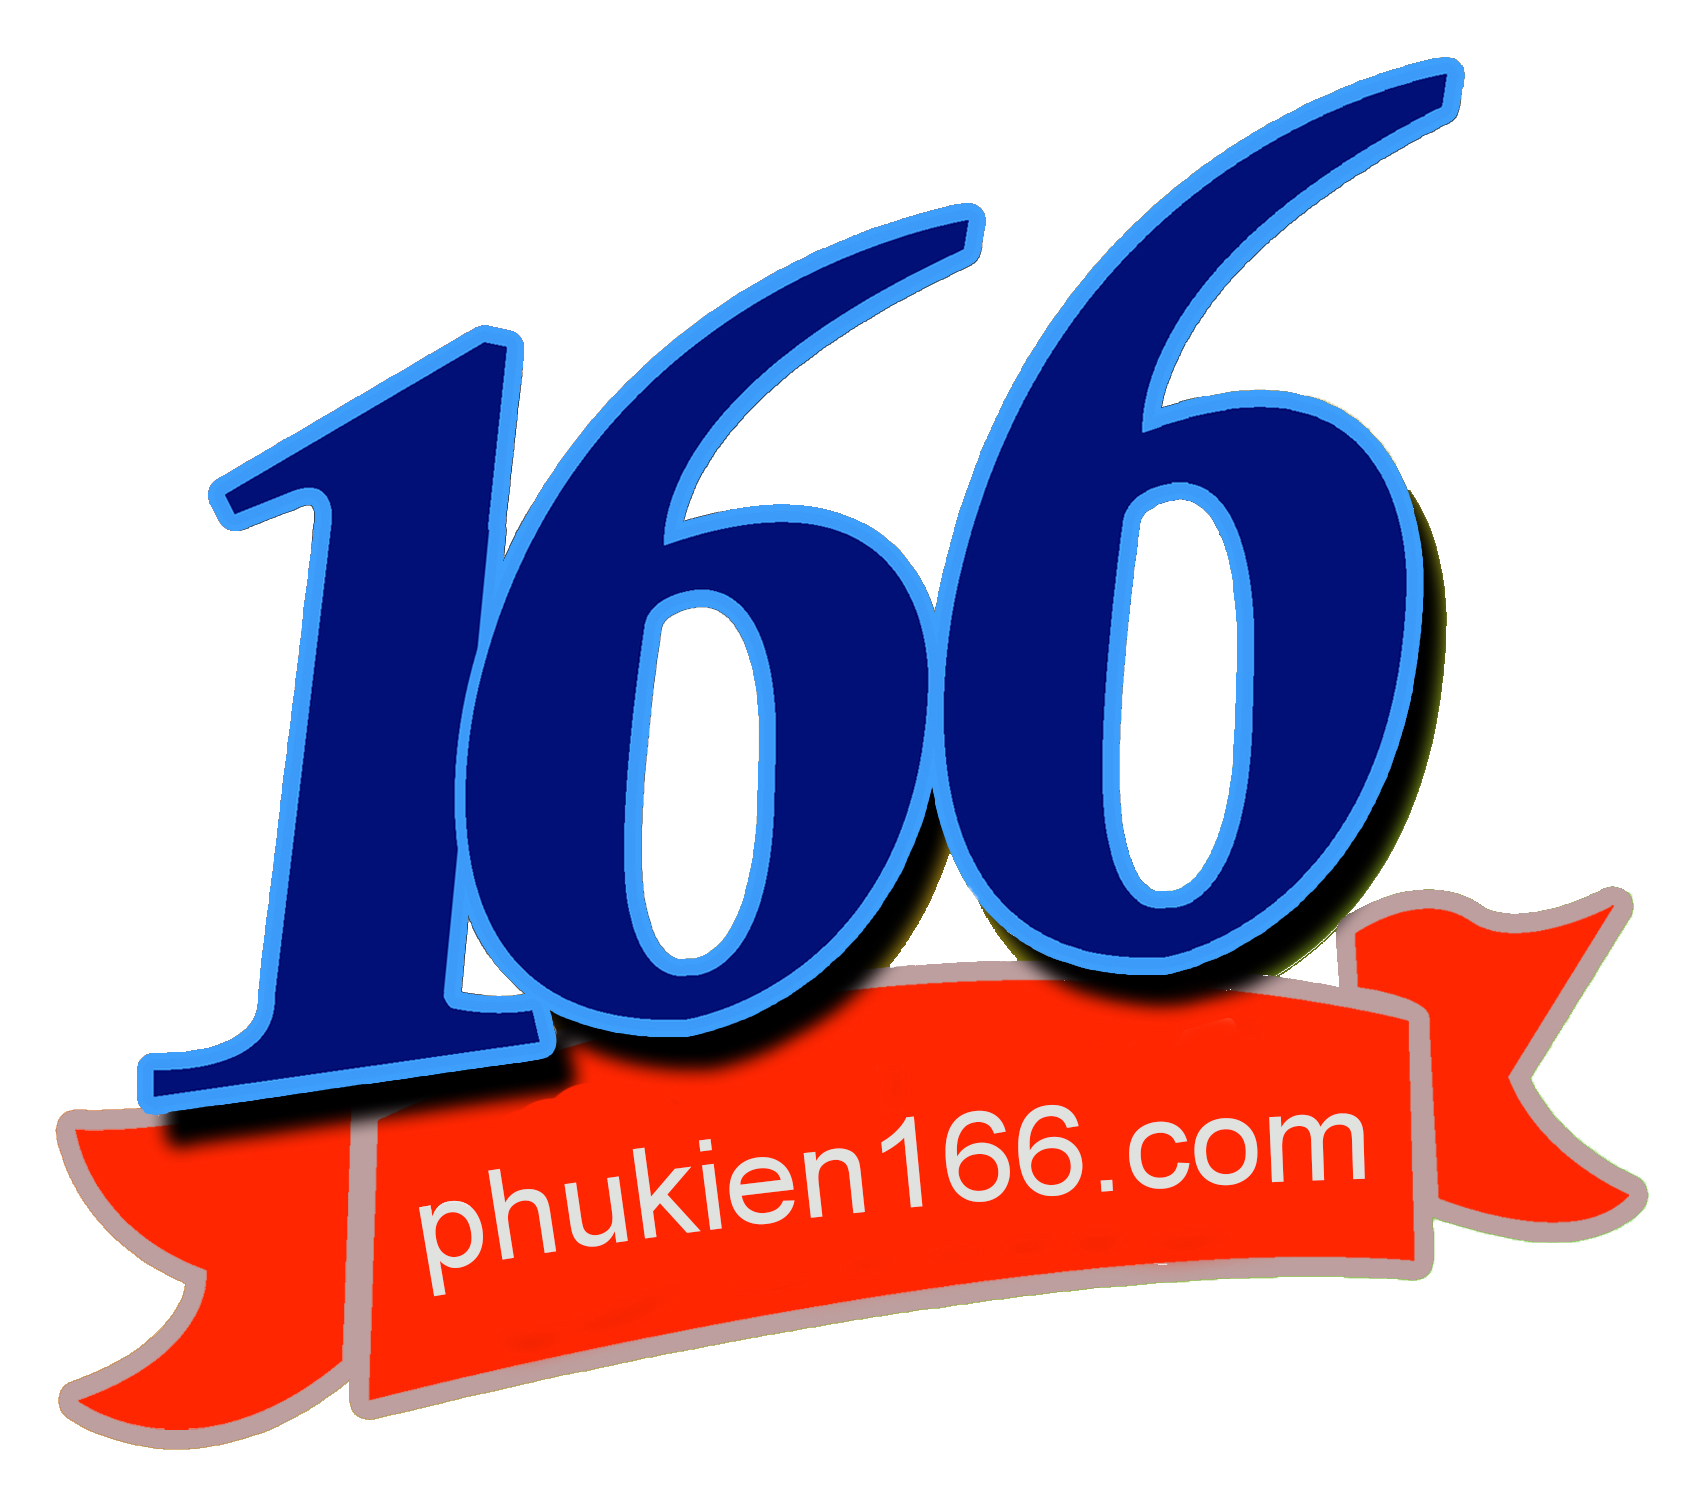 phukien166